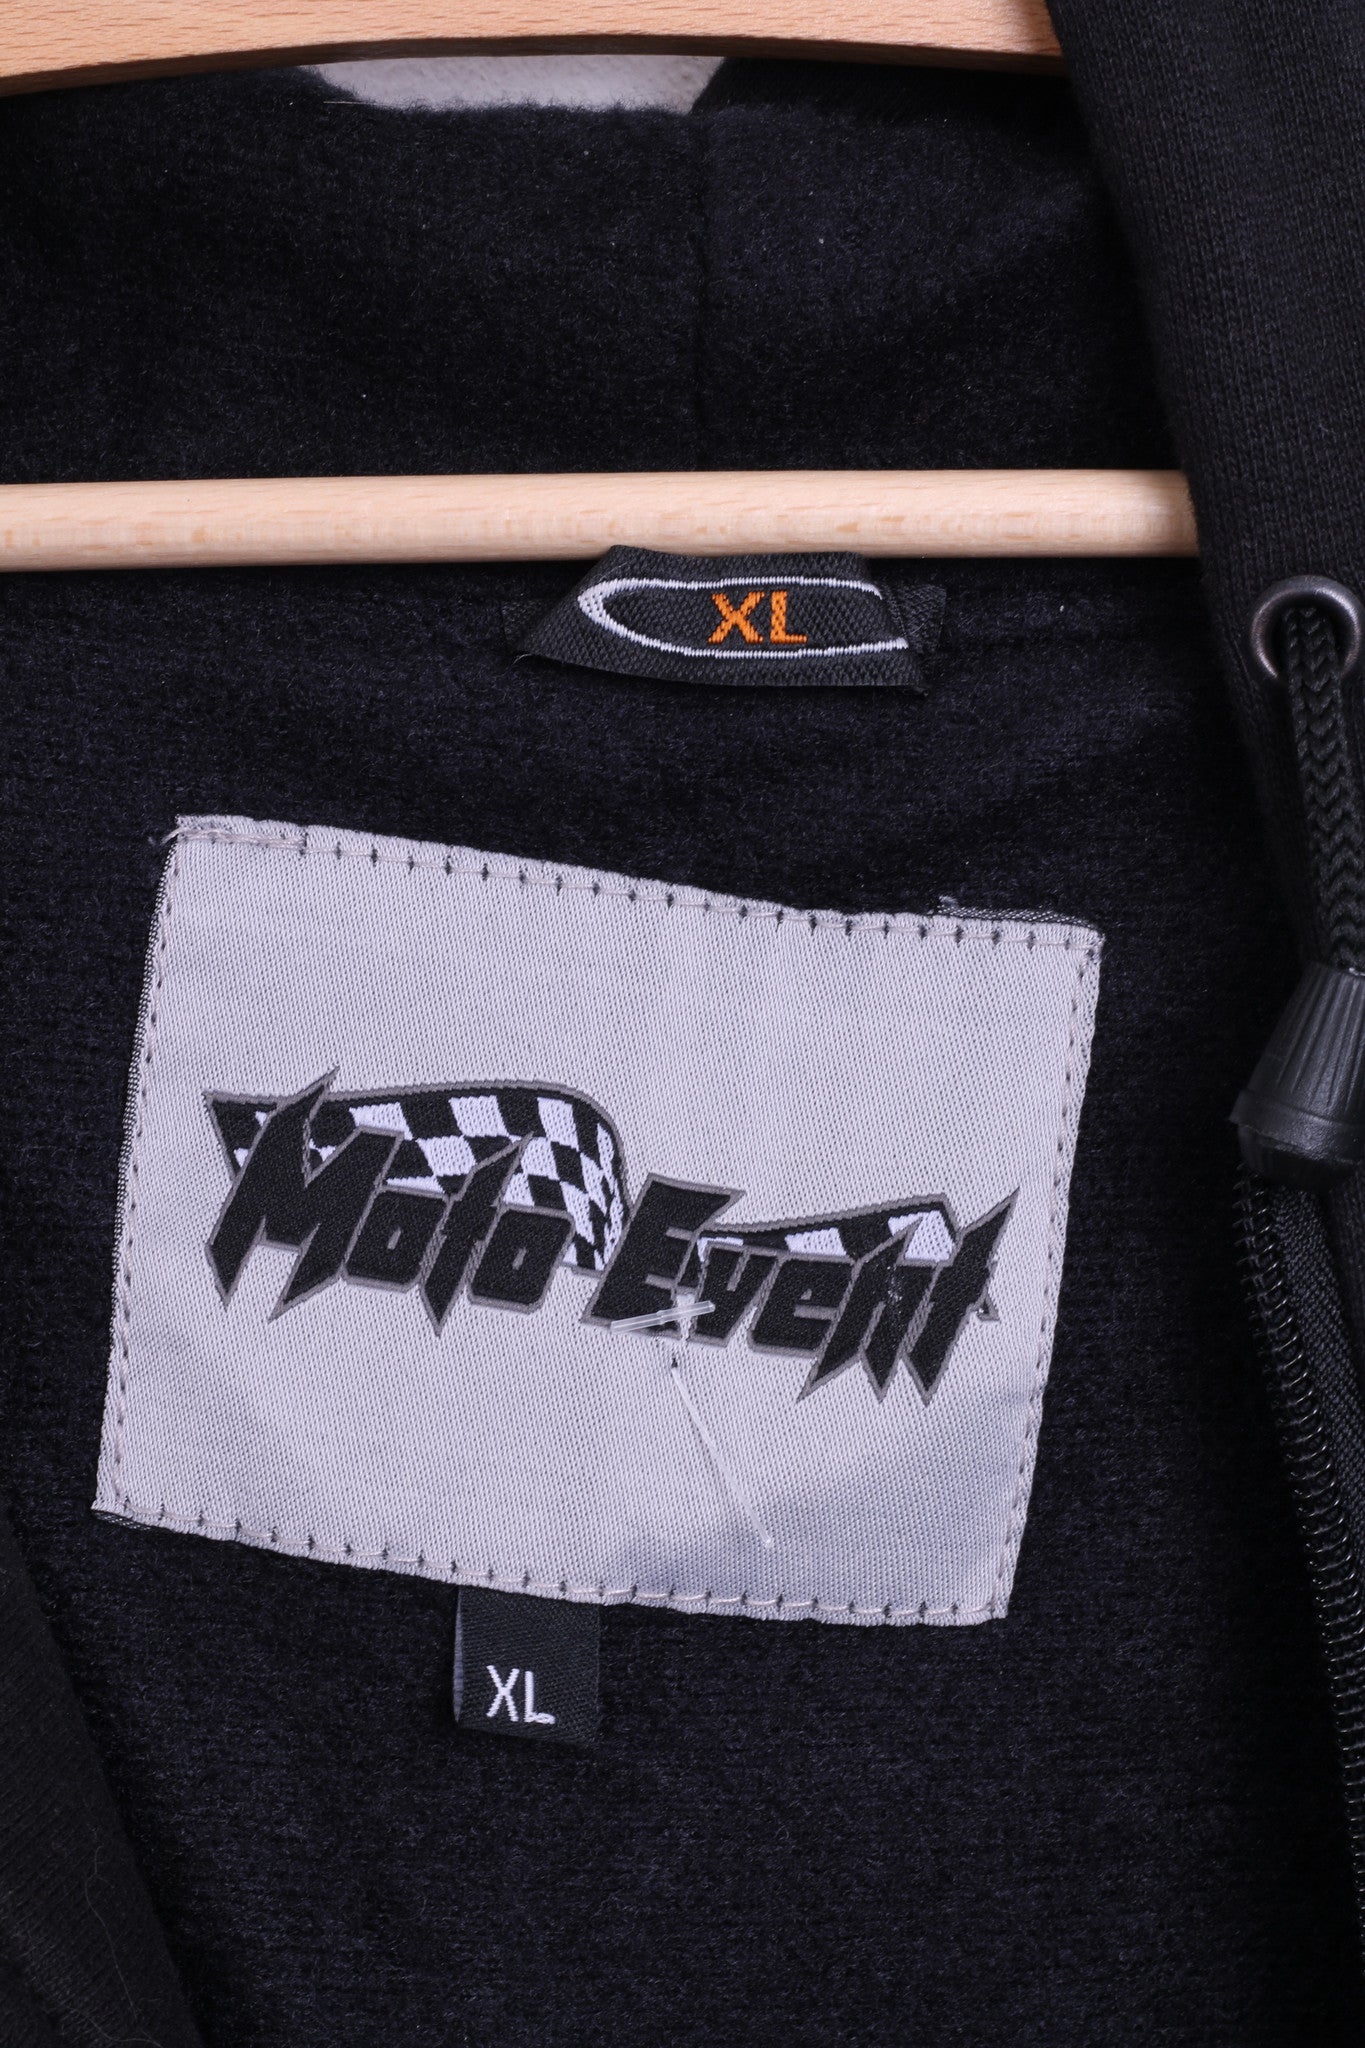 Moto Event Mens XL Sweatshirt Black Hood Cotton Monster Supercross - RetrospectClothes